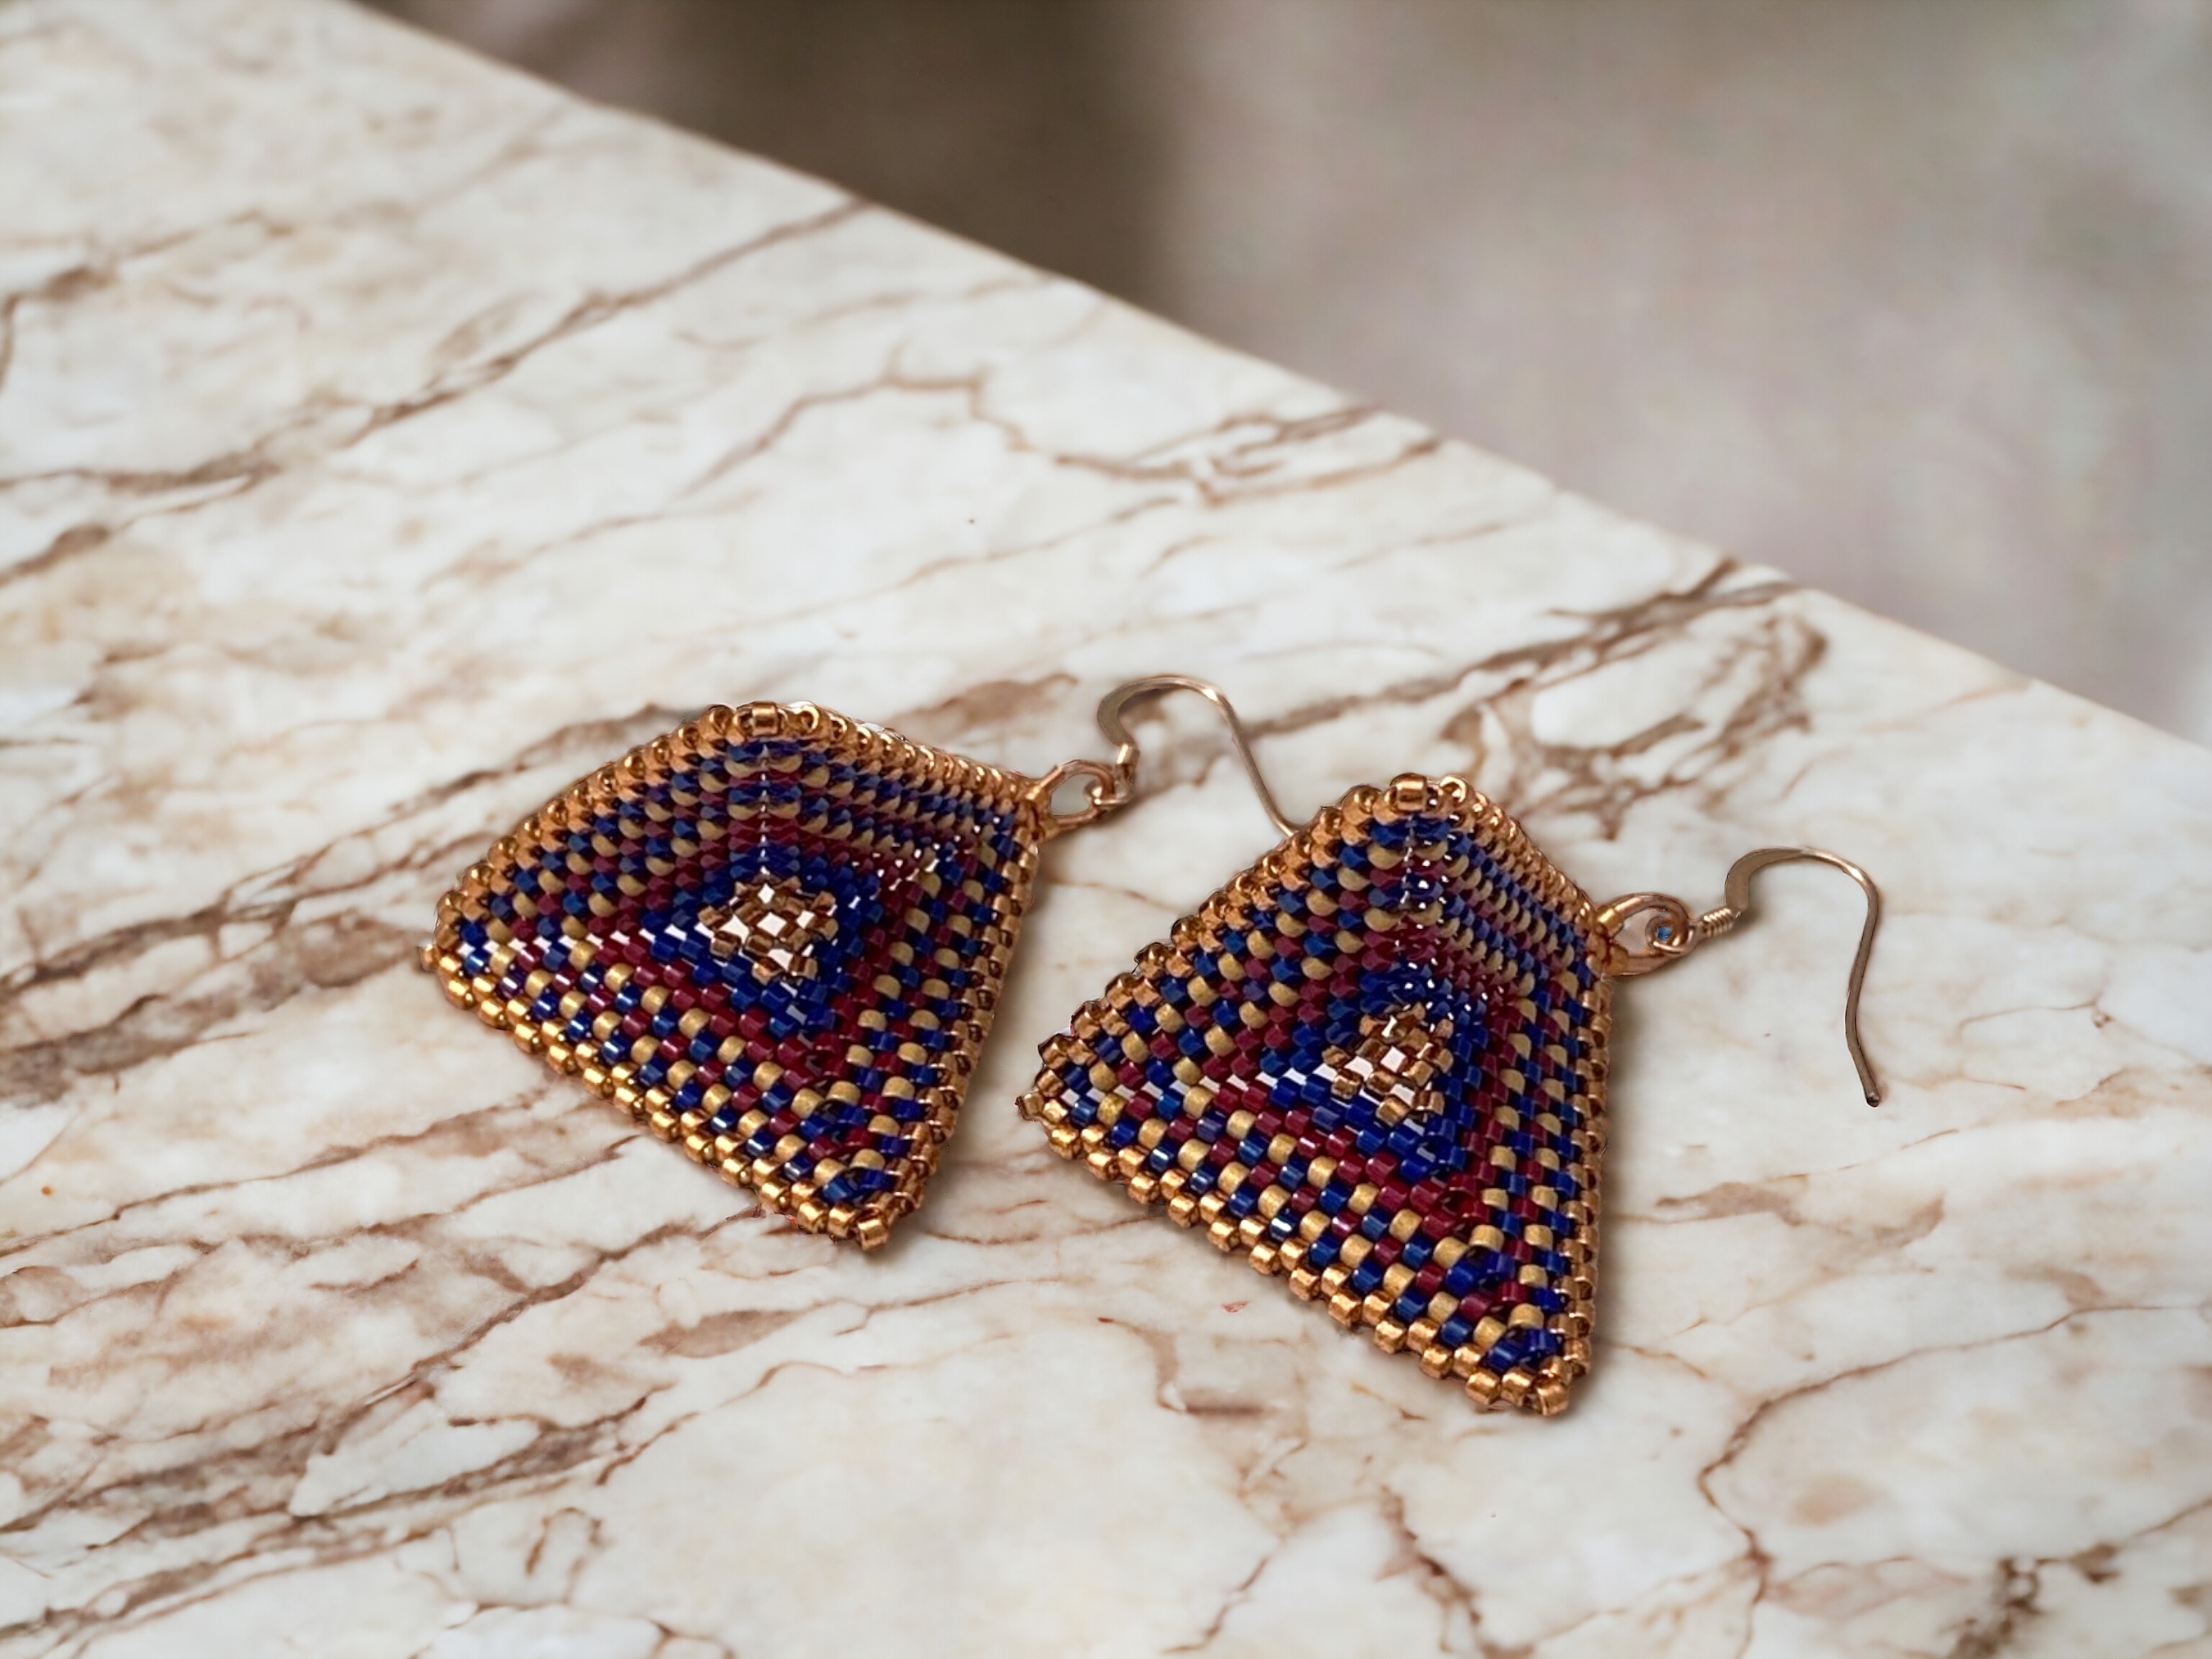 Geometric Beadwork Earrings in Spanish Tile Colors